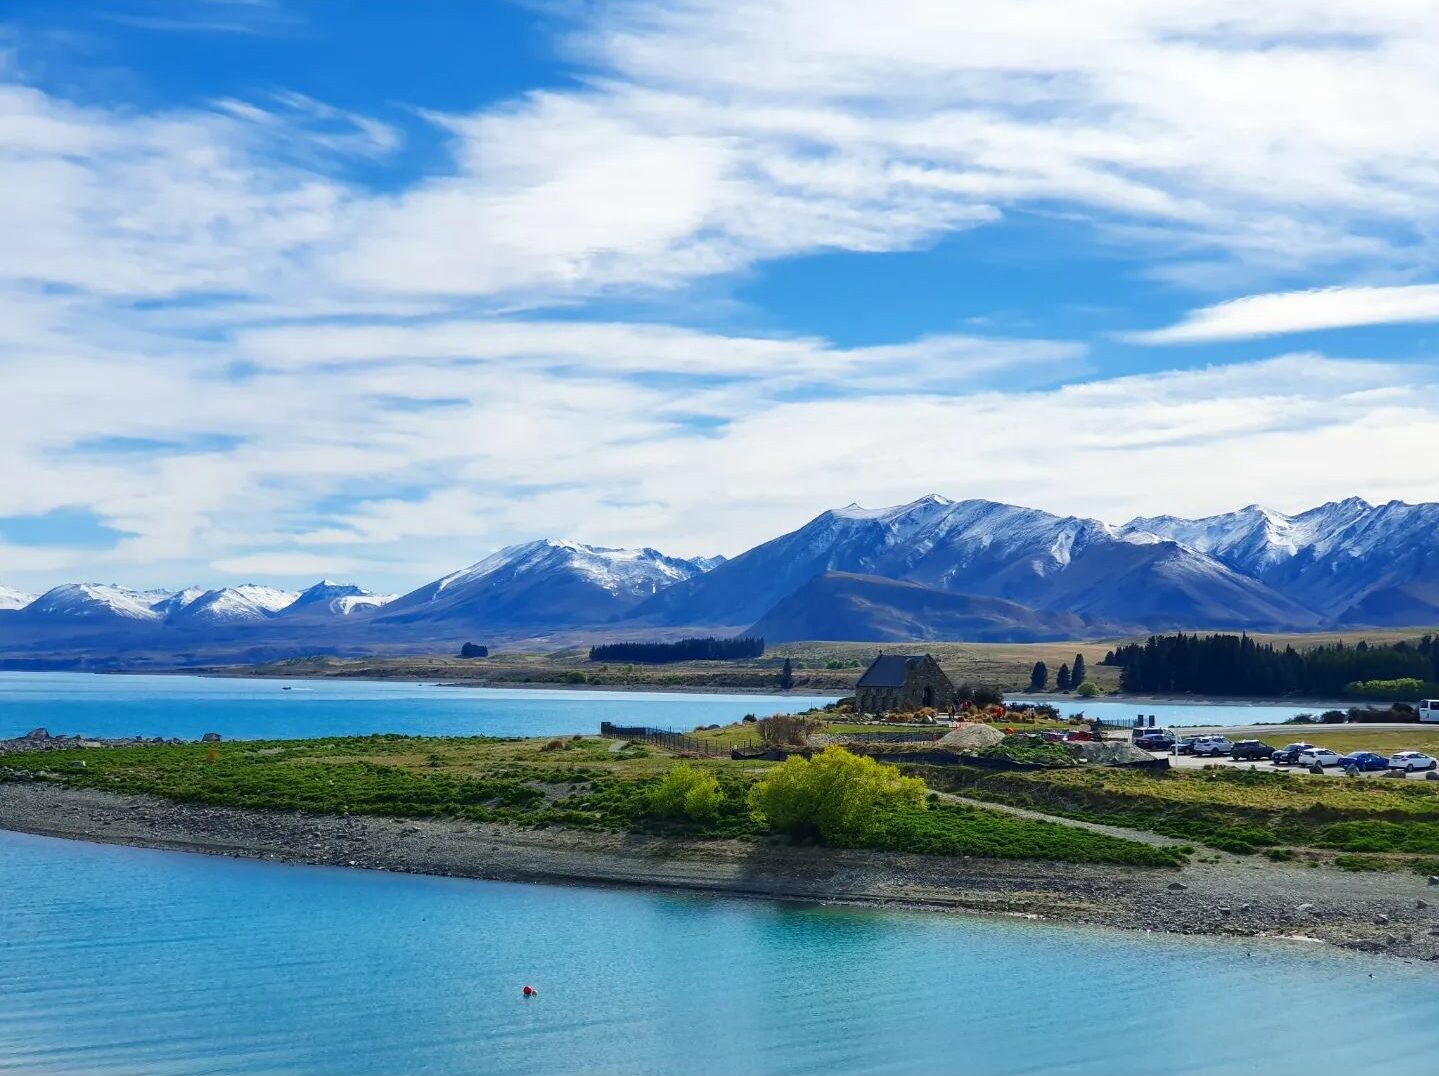 New Zealand itinerary for winter activities 2023 - Lake Tekapo